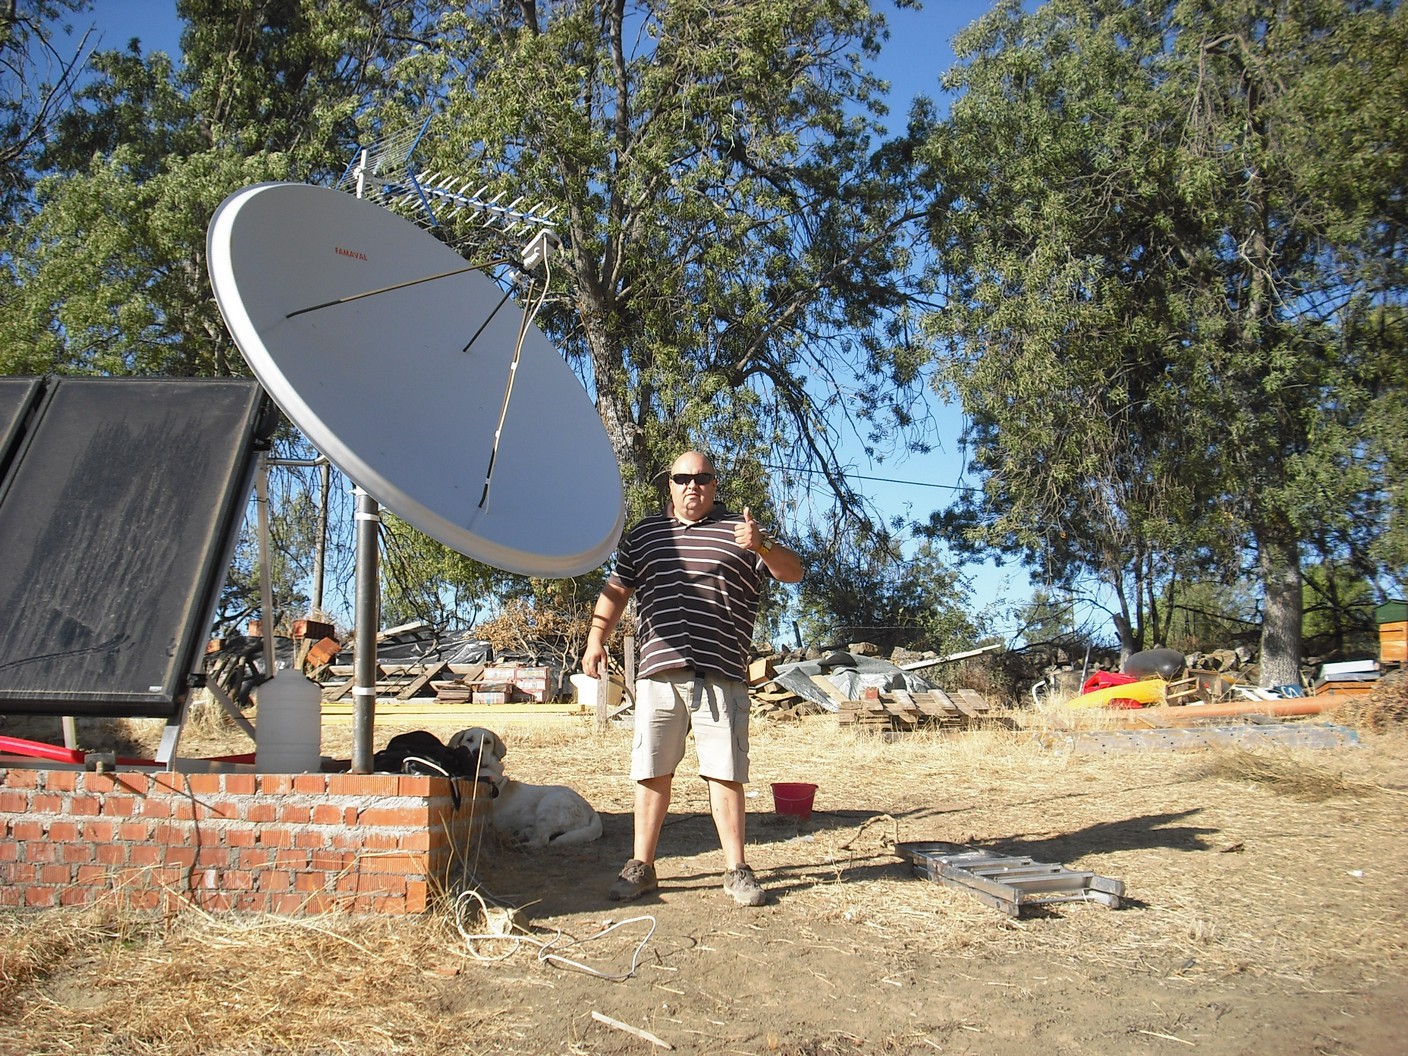 sky tv installers satellite dishes sky cards in spain costa blanca madrid marbella malaga3